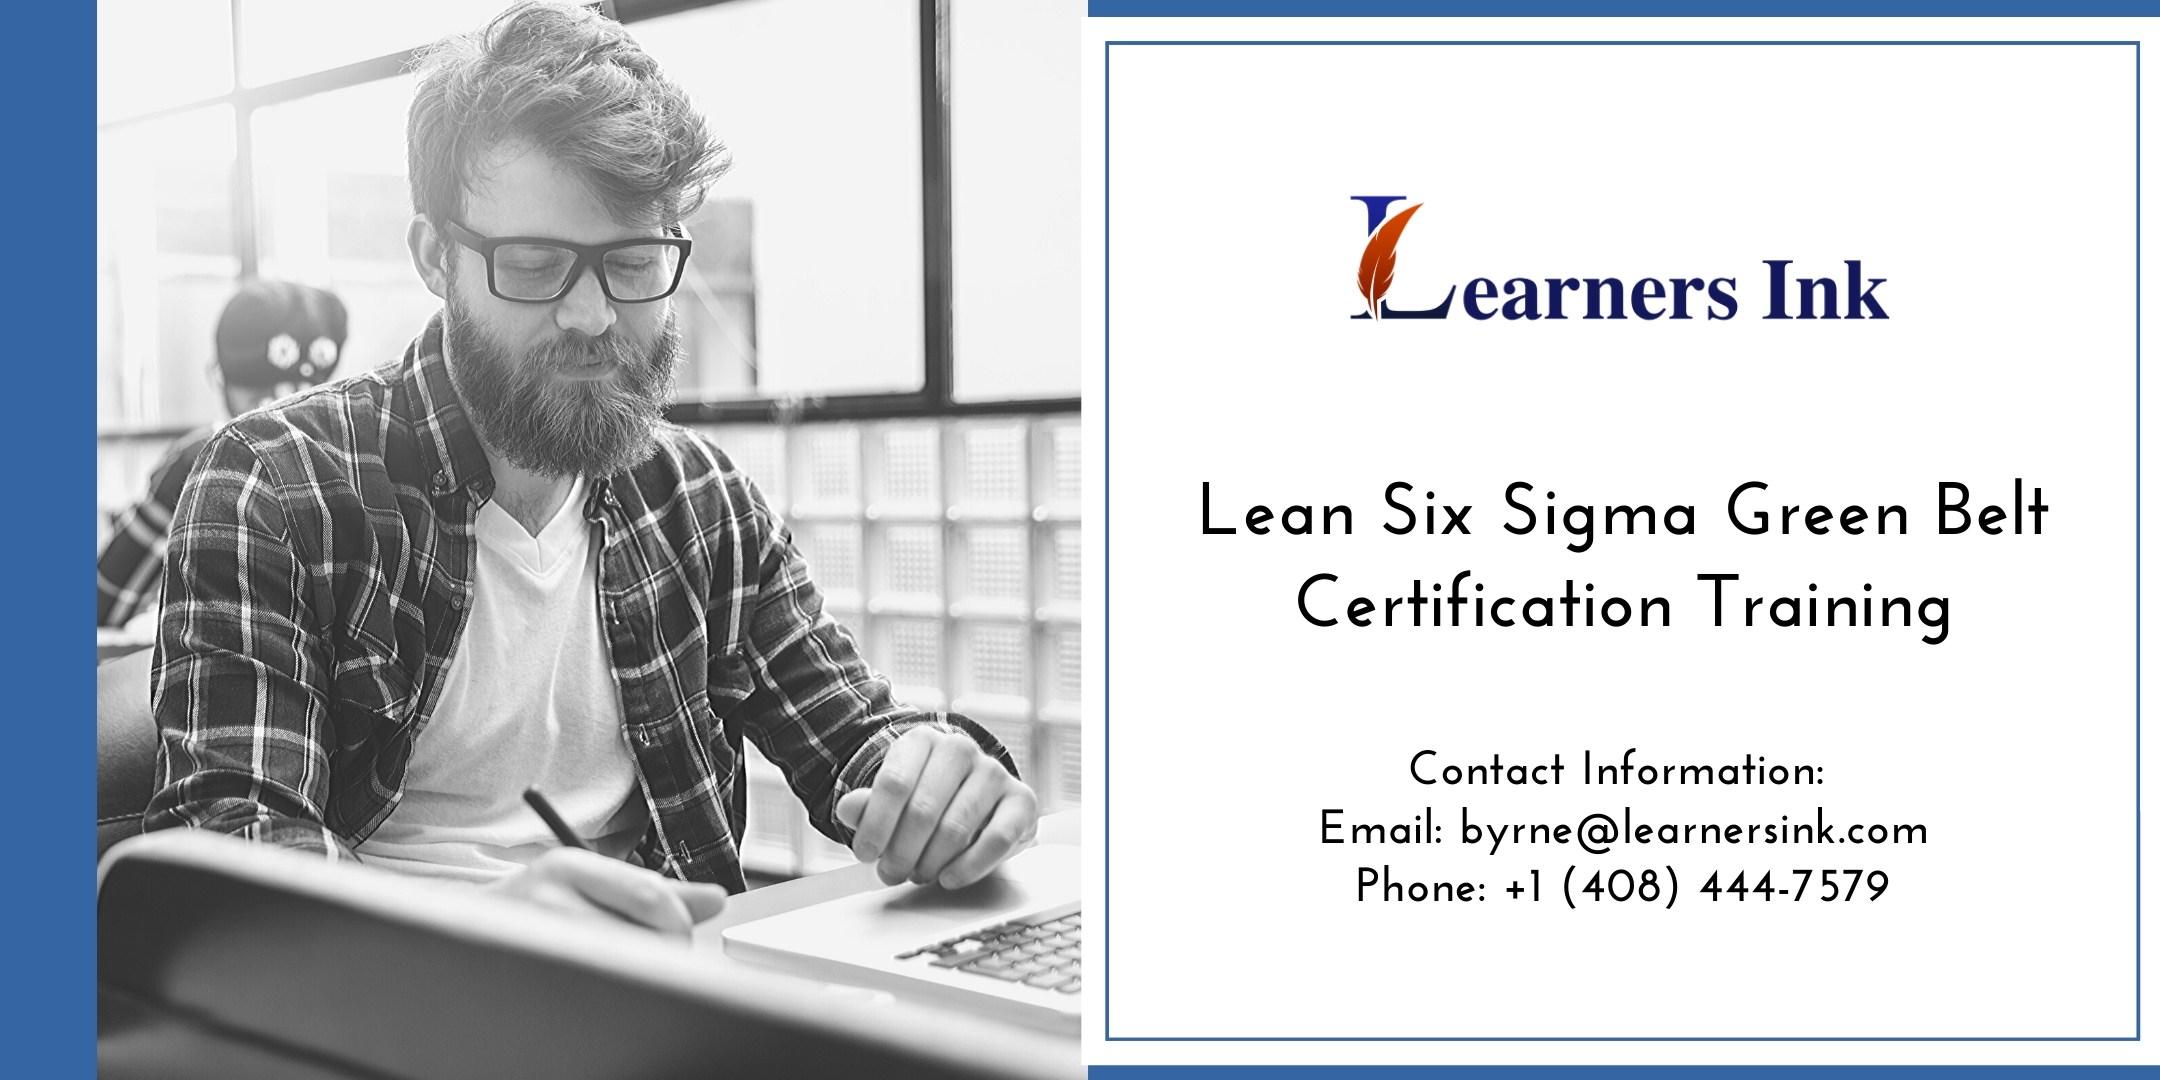 Lean Six Sigma Green Belt Certification Training Course (LSSGB) in Denver